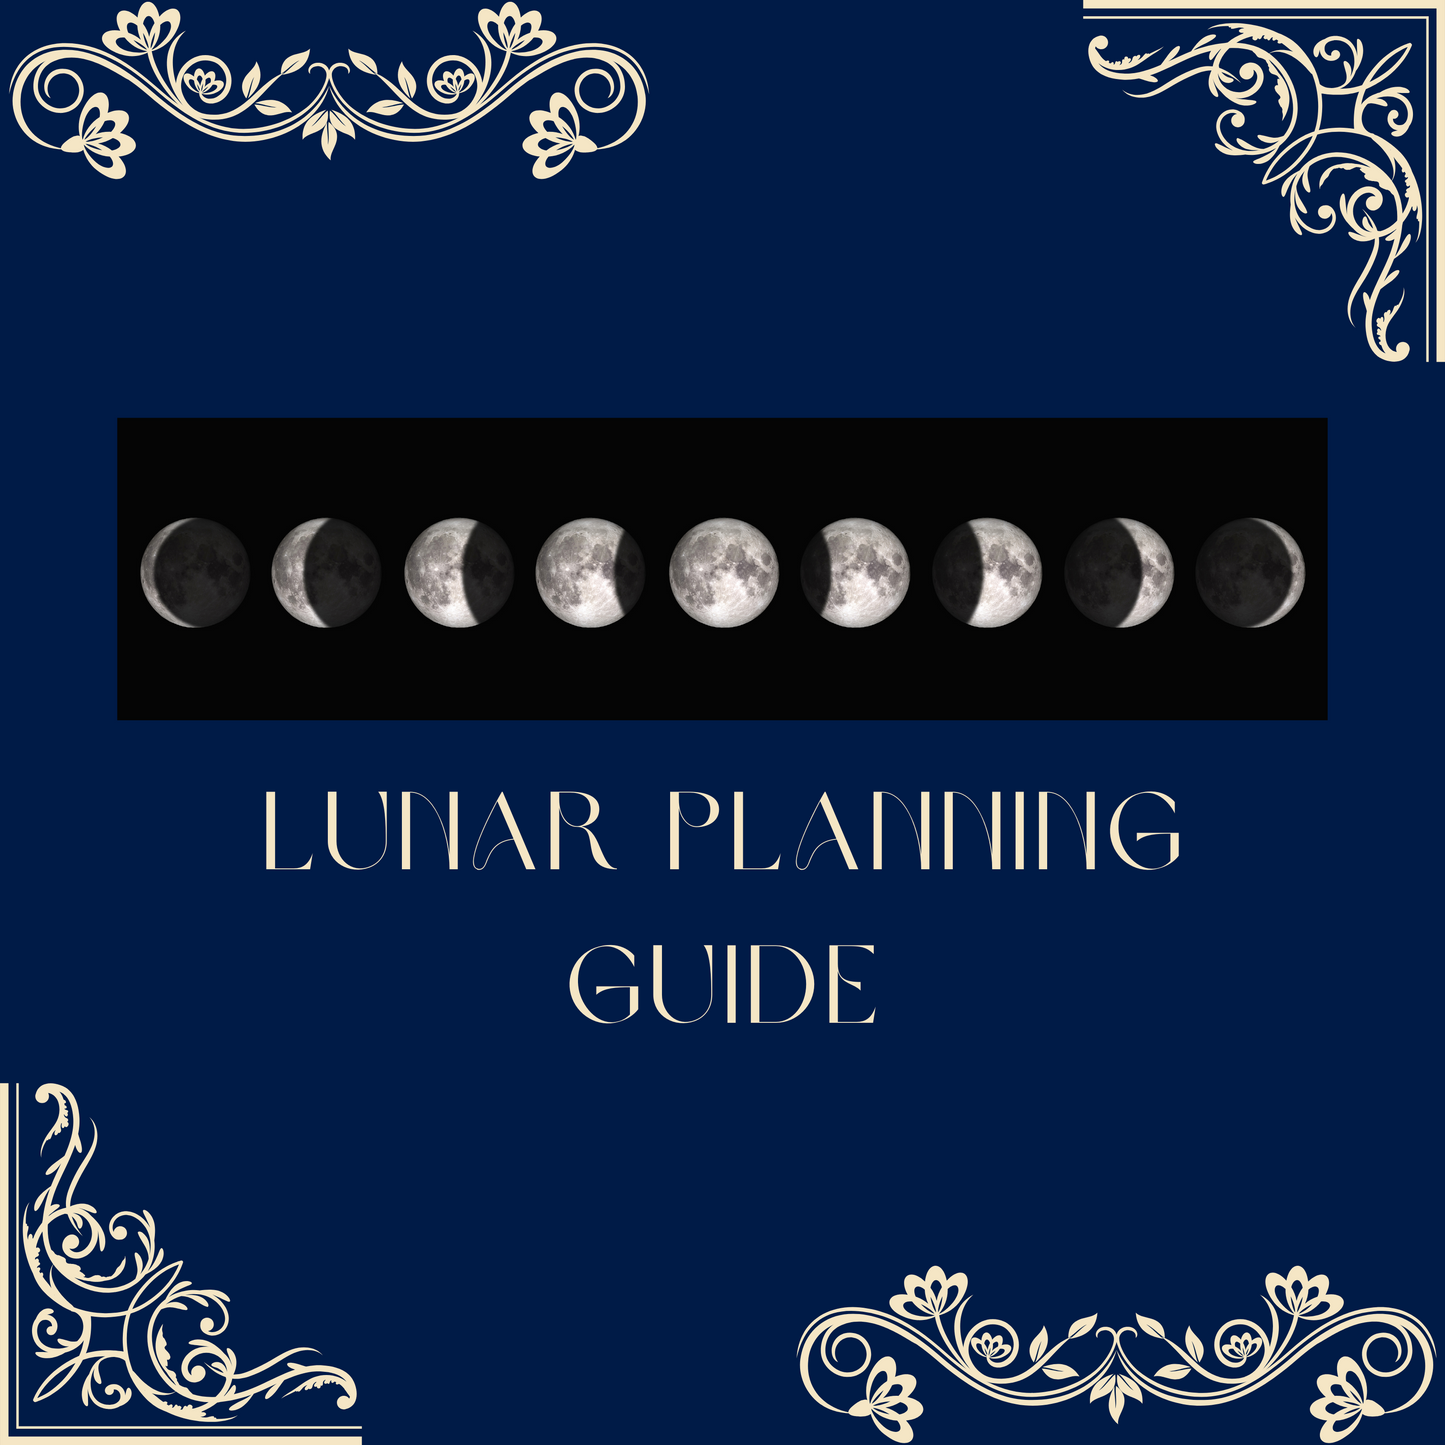 Lunar Planning Guide